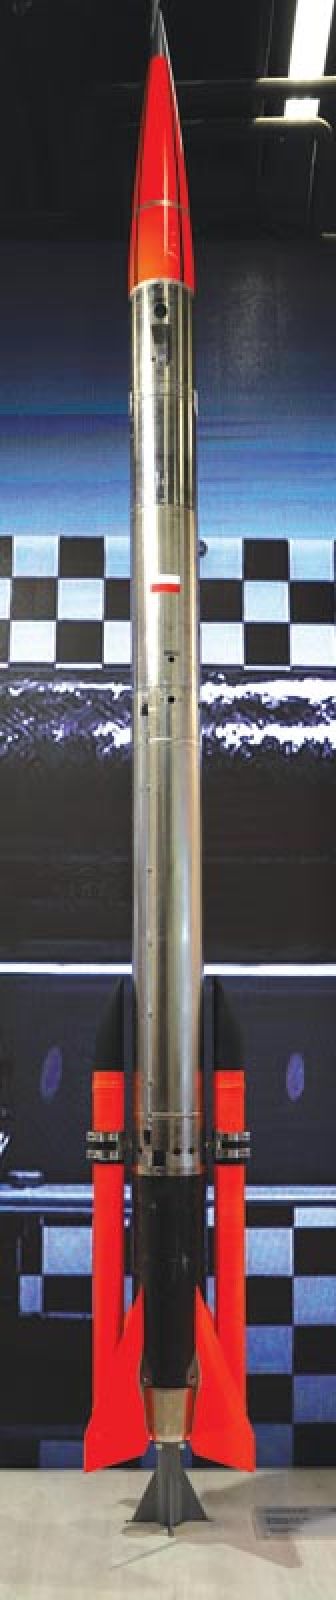 Eksperymentalna rakieta ILR-33 Bursztyn